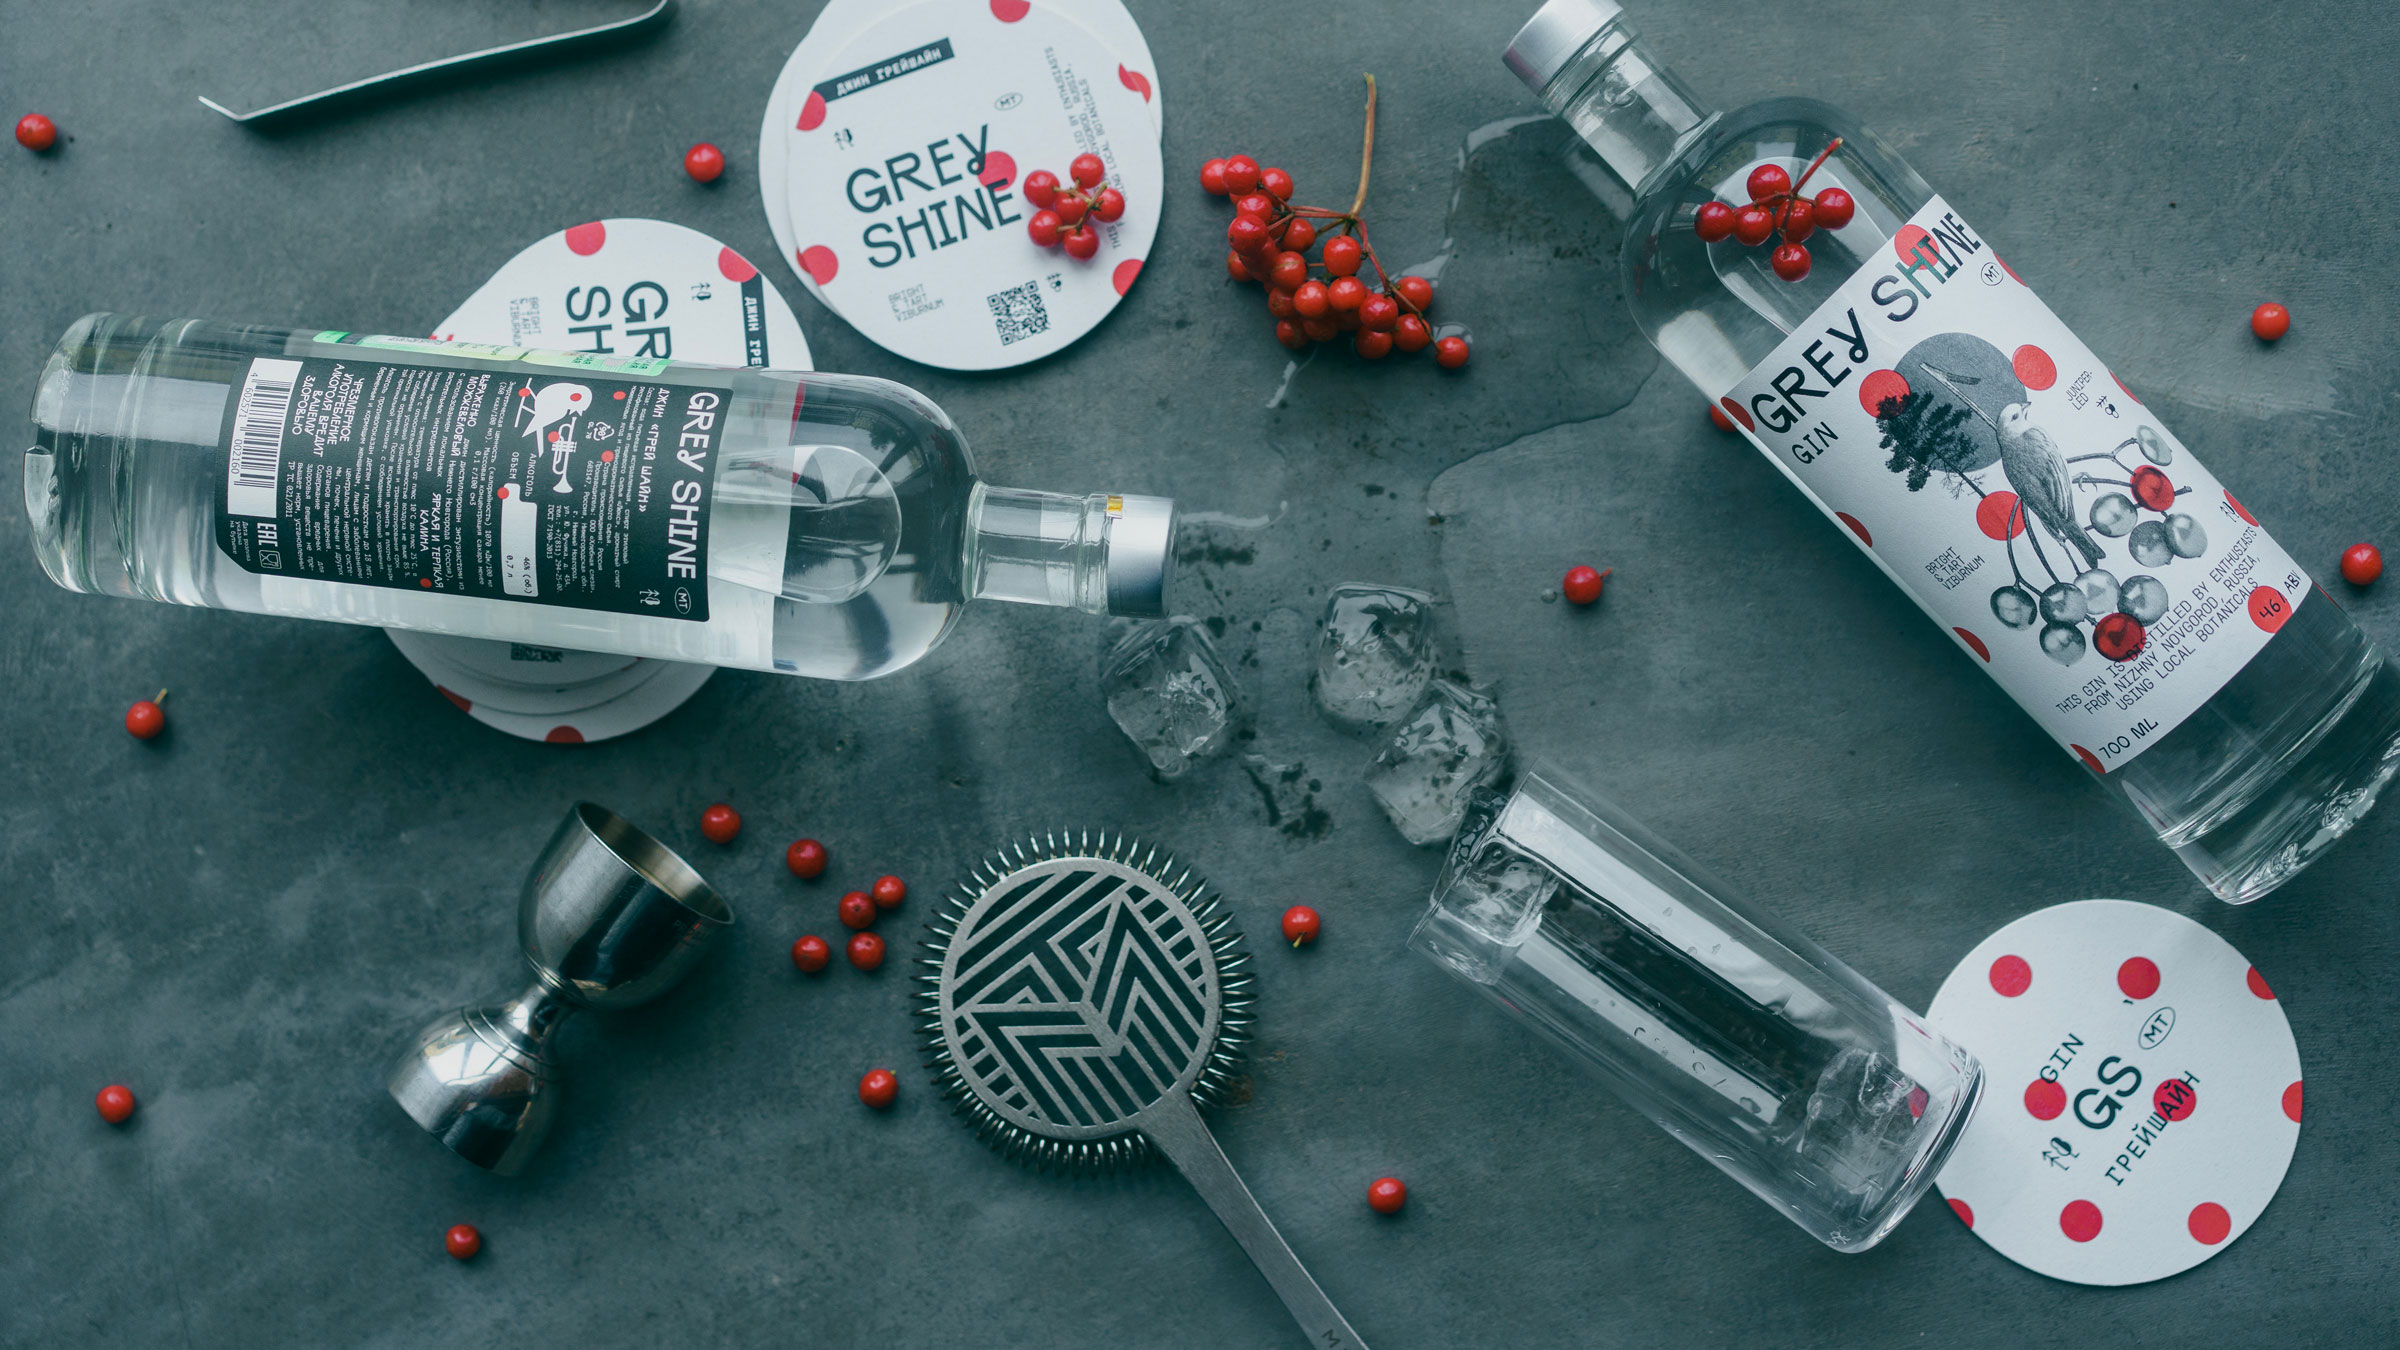 Grey Shine Gin Branding and Packaging Design